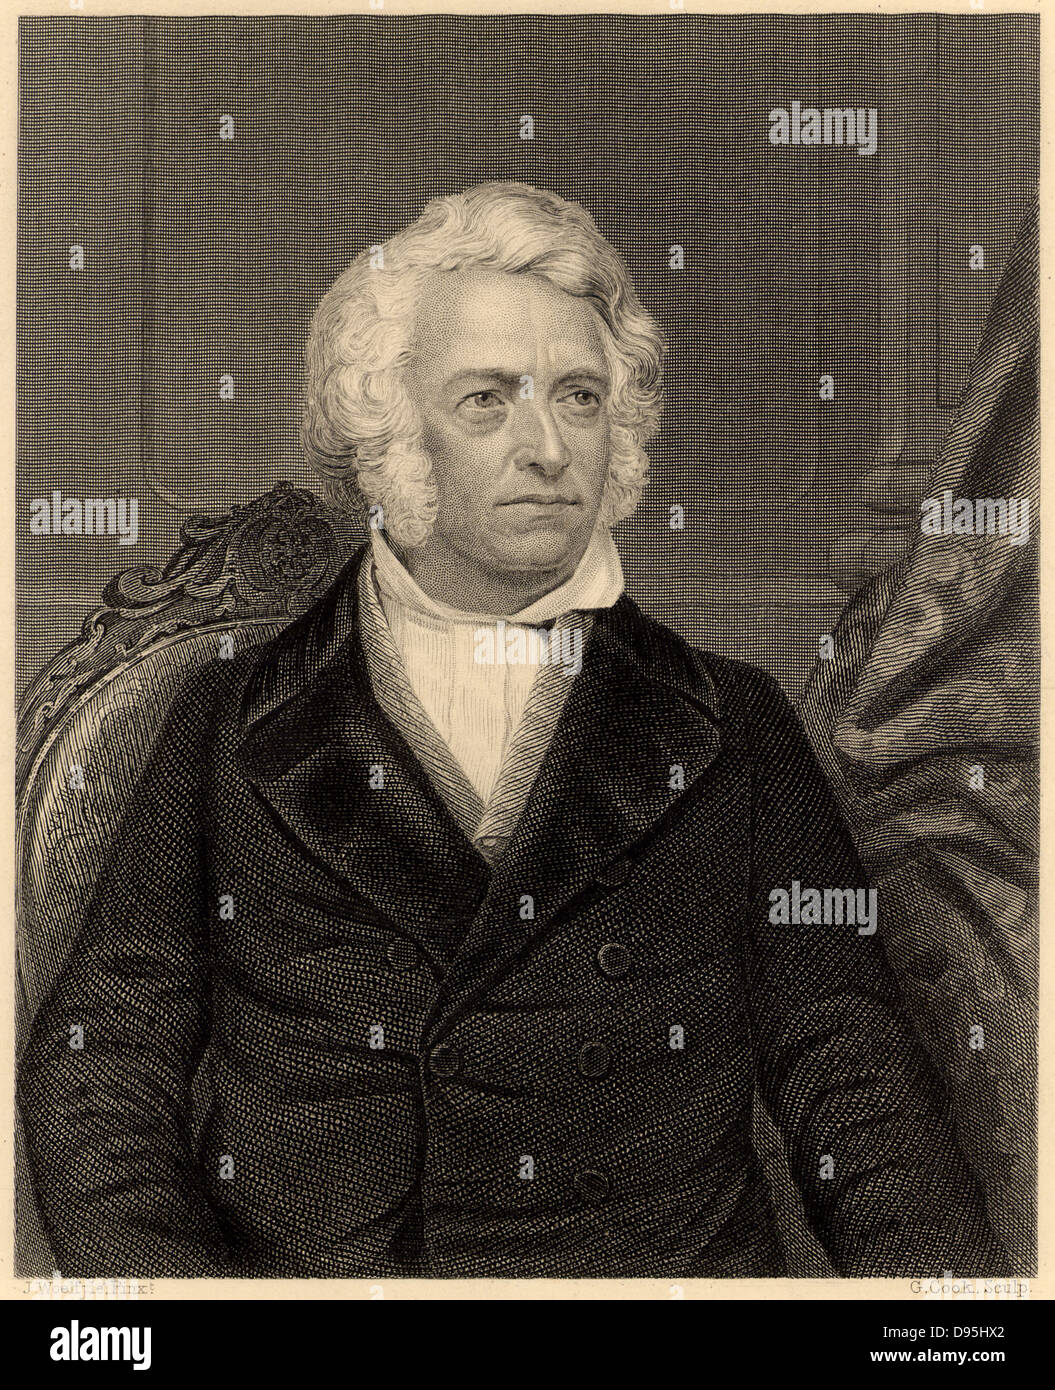 Leopold Gmelin (1788-1853), German physiological chemist. Professor of chemistry and medicine at Heidelberg University 1817-1852. From James Sheridan Muspratt 'Chemistry' (London, c1860). Engraving. Stock Photo